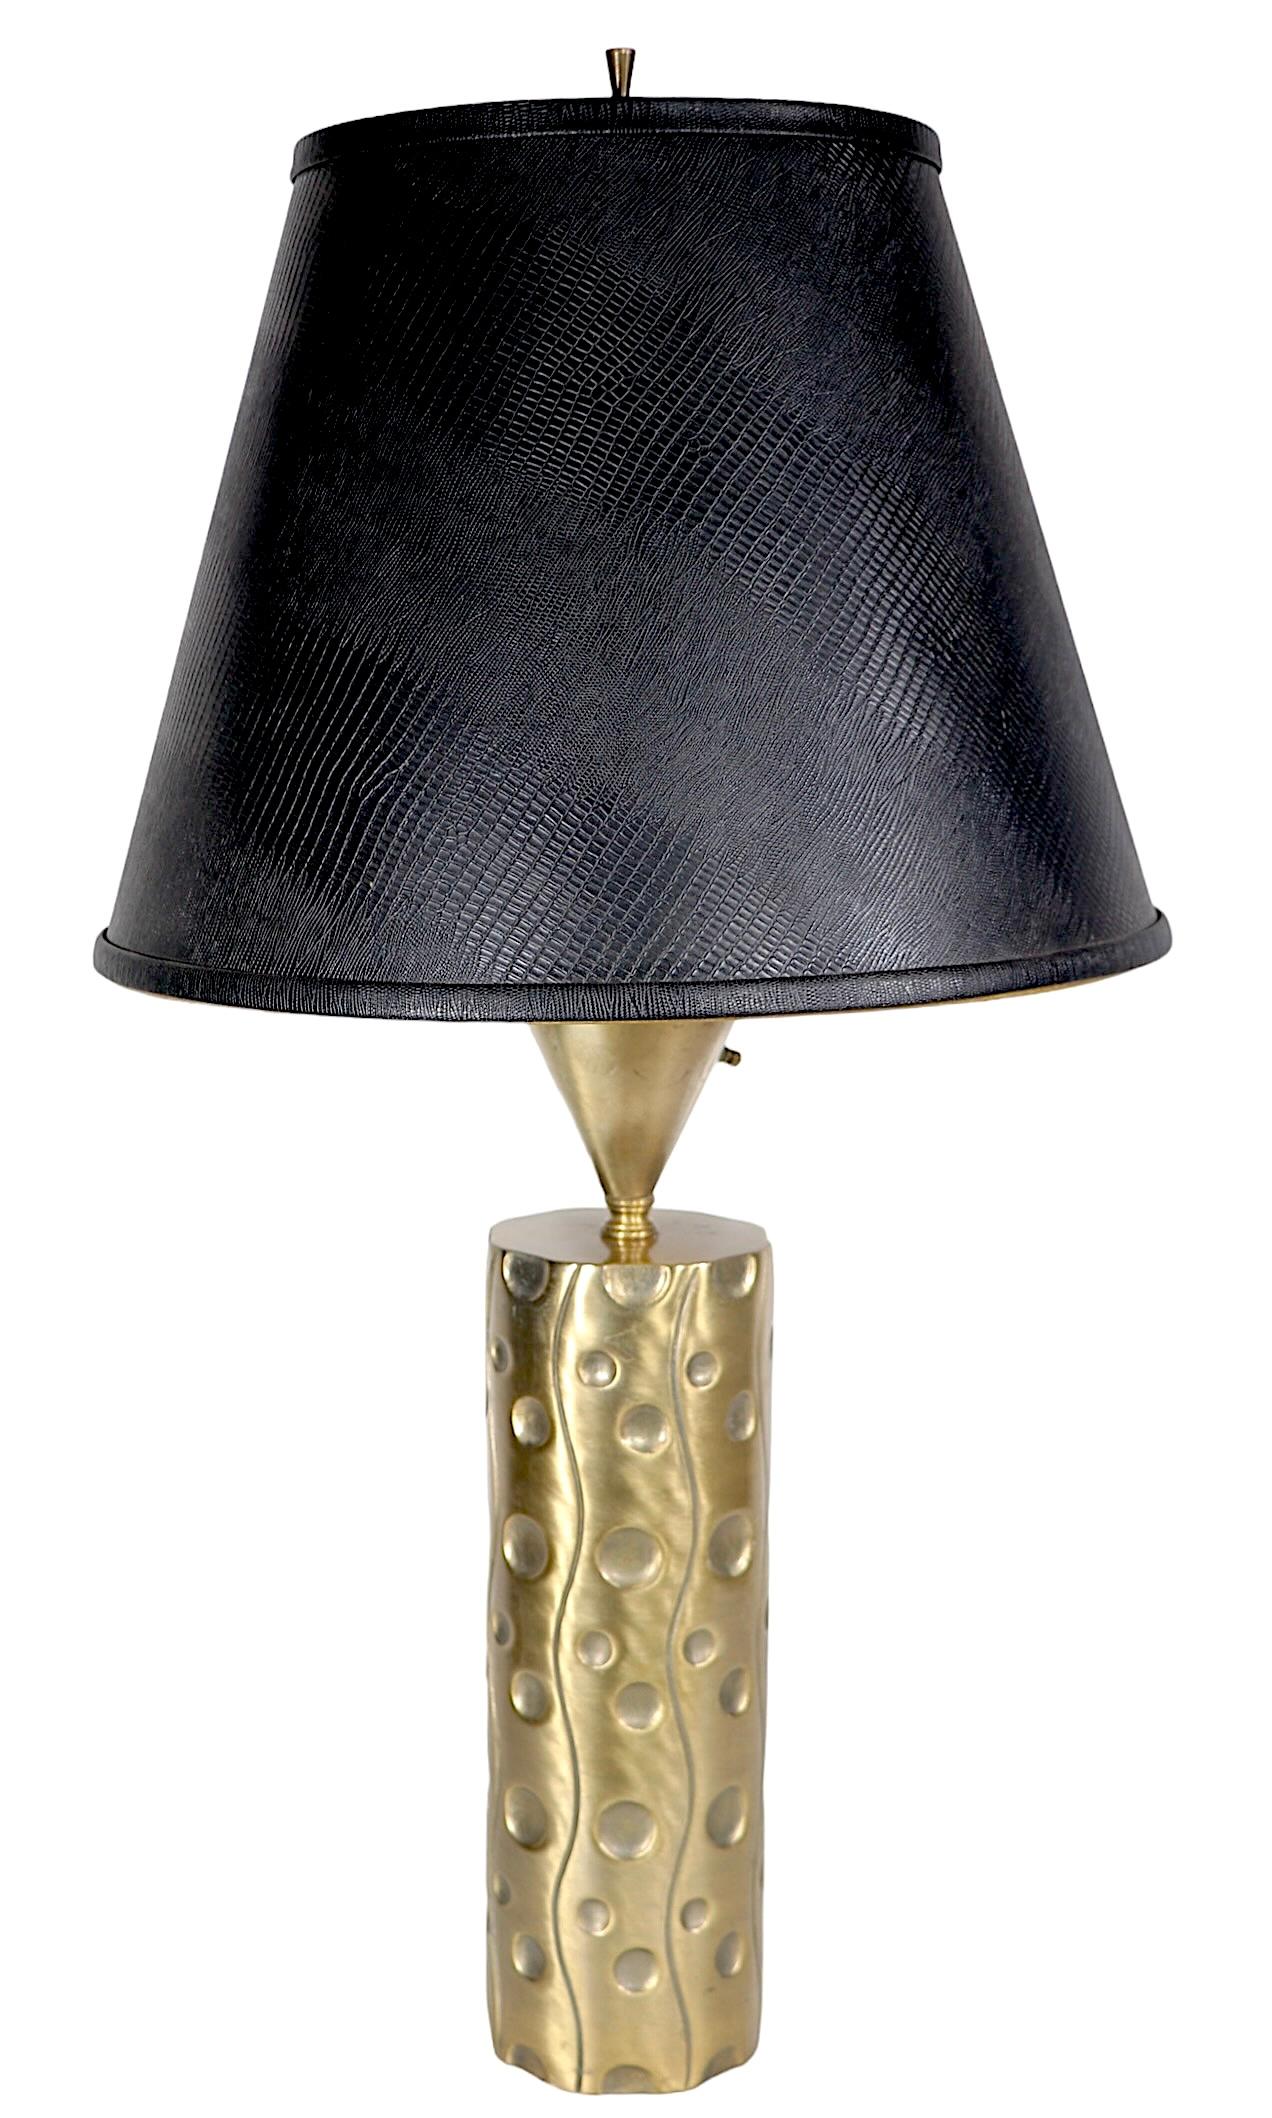  Westwood Table Lamp att. Tony Paul c. 1950/1970's  For Sale 3